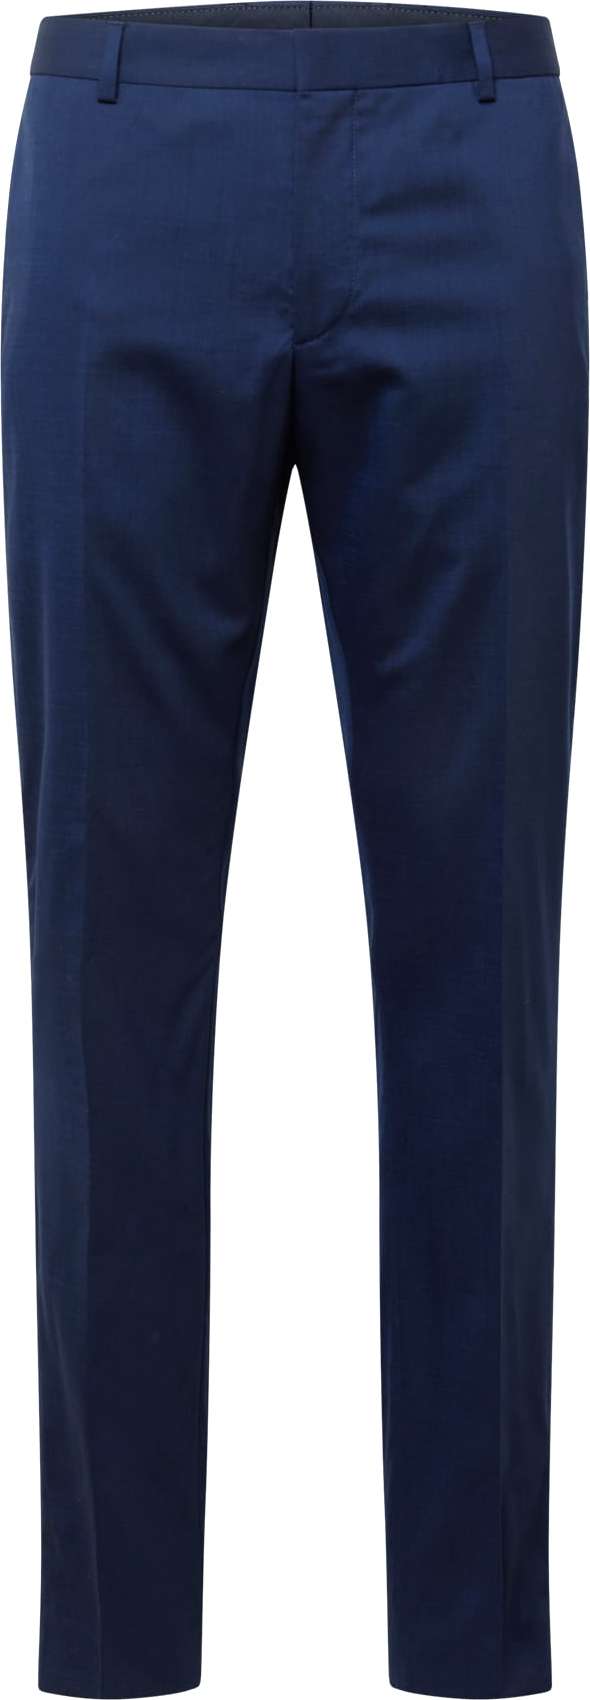 Kalhoty s puky Calvin Klein tmavě modrá